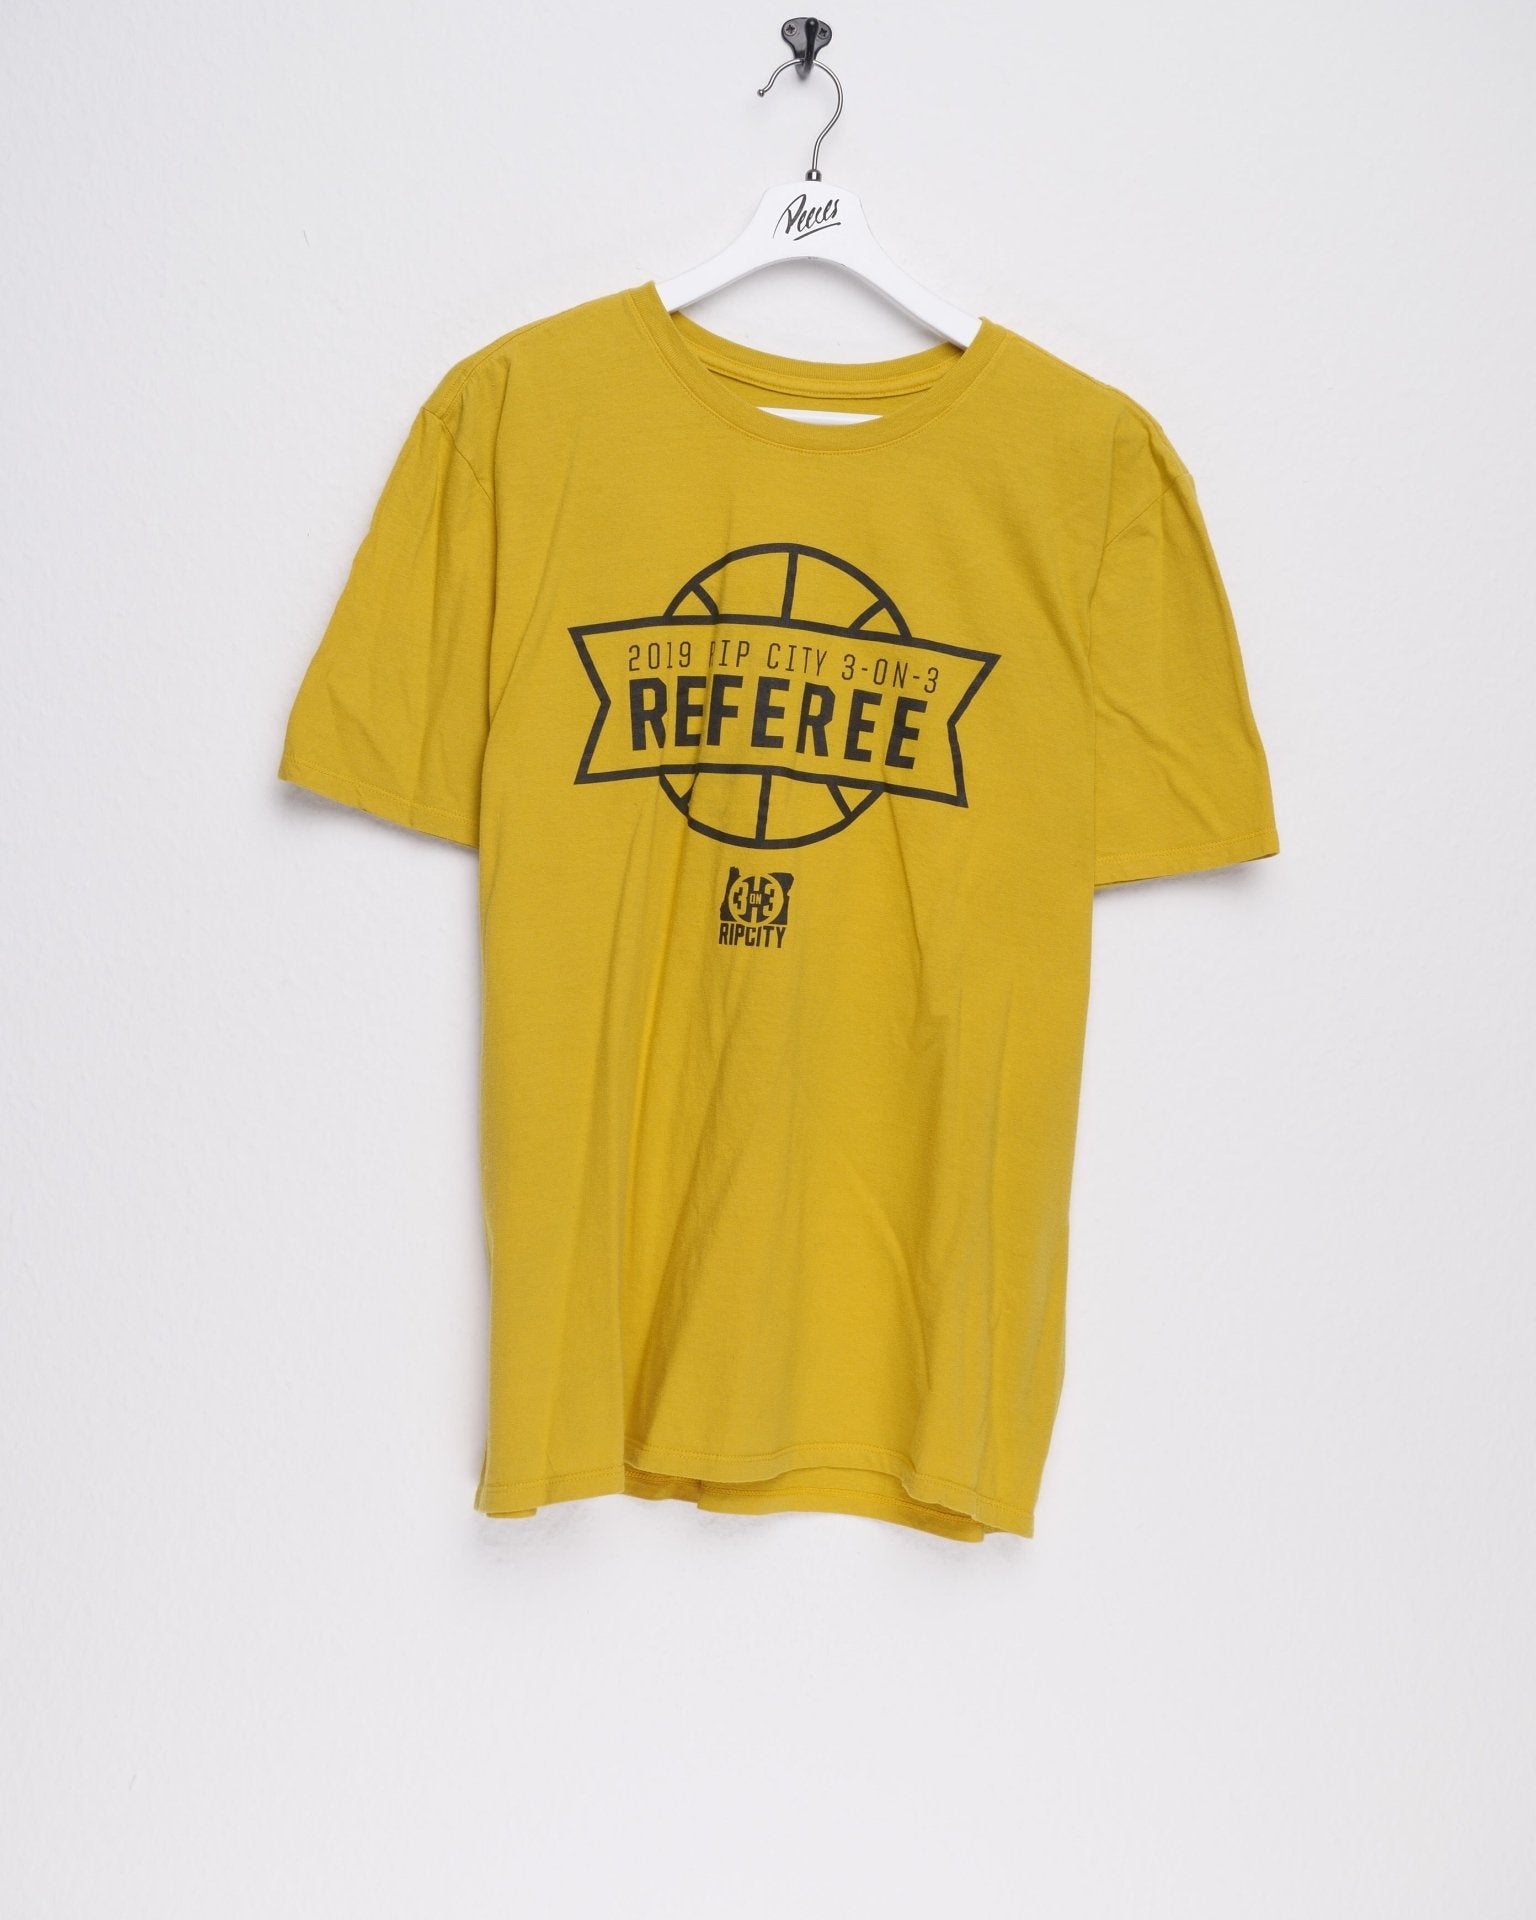 nike 'Rip City Referee' printed Graphic yellow Shirt - Peeces